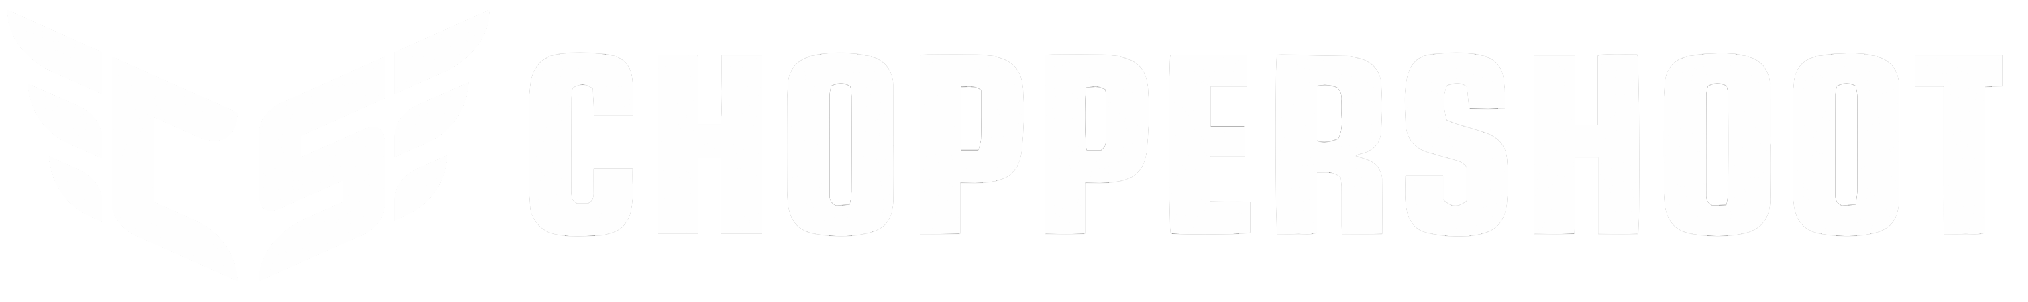 Choppershoot logo mark